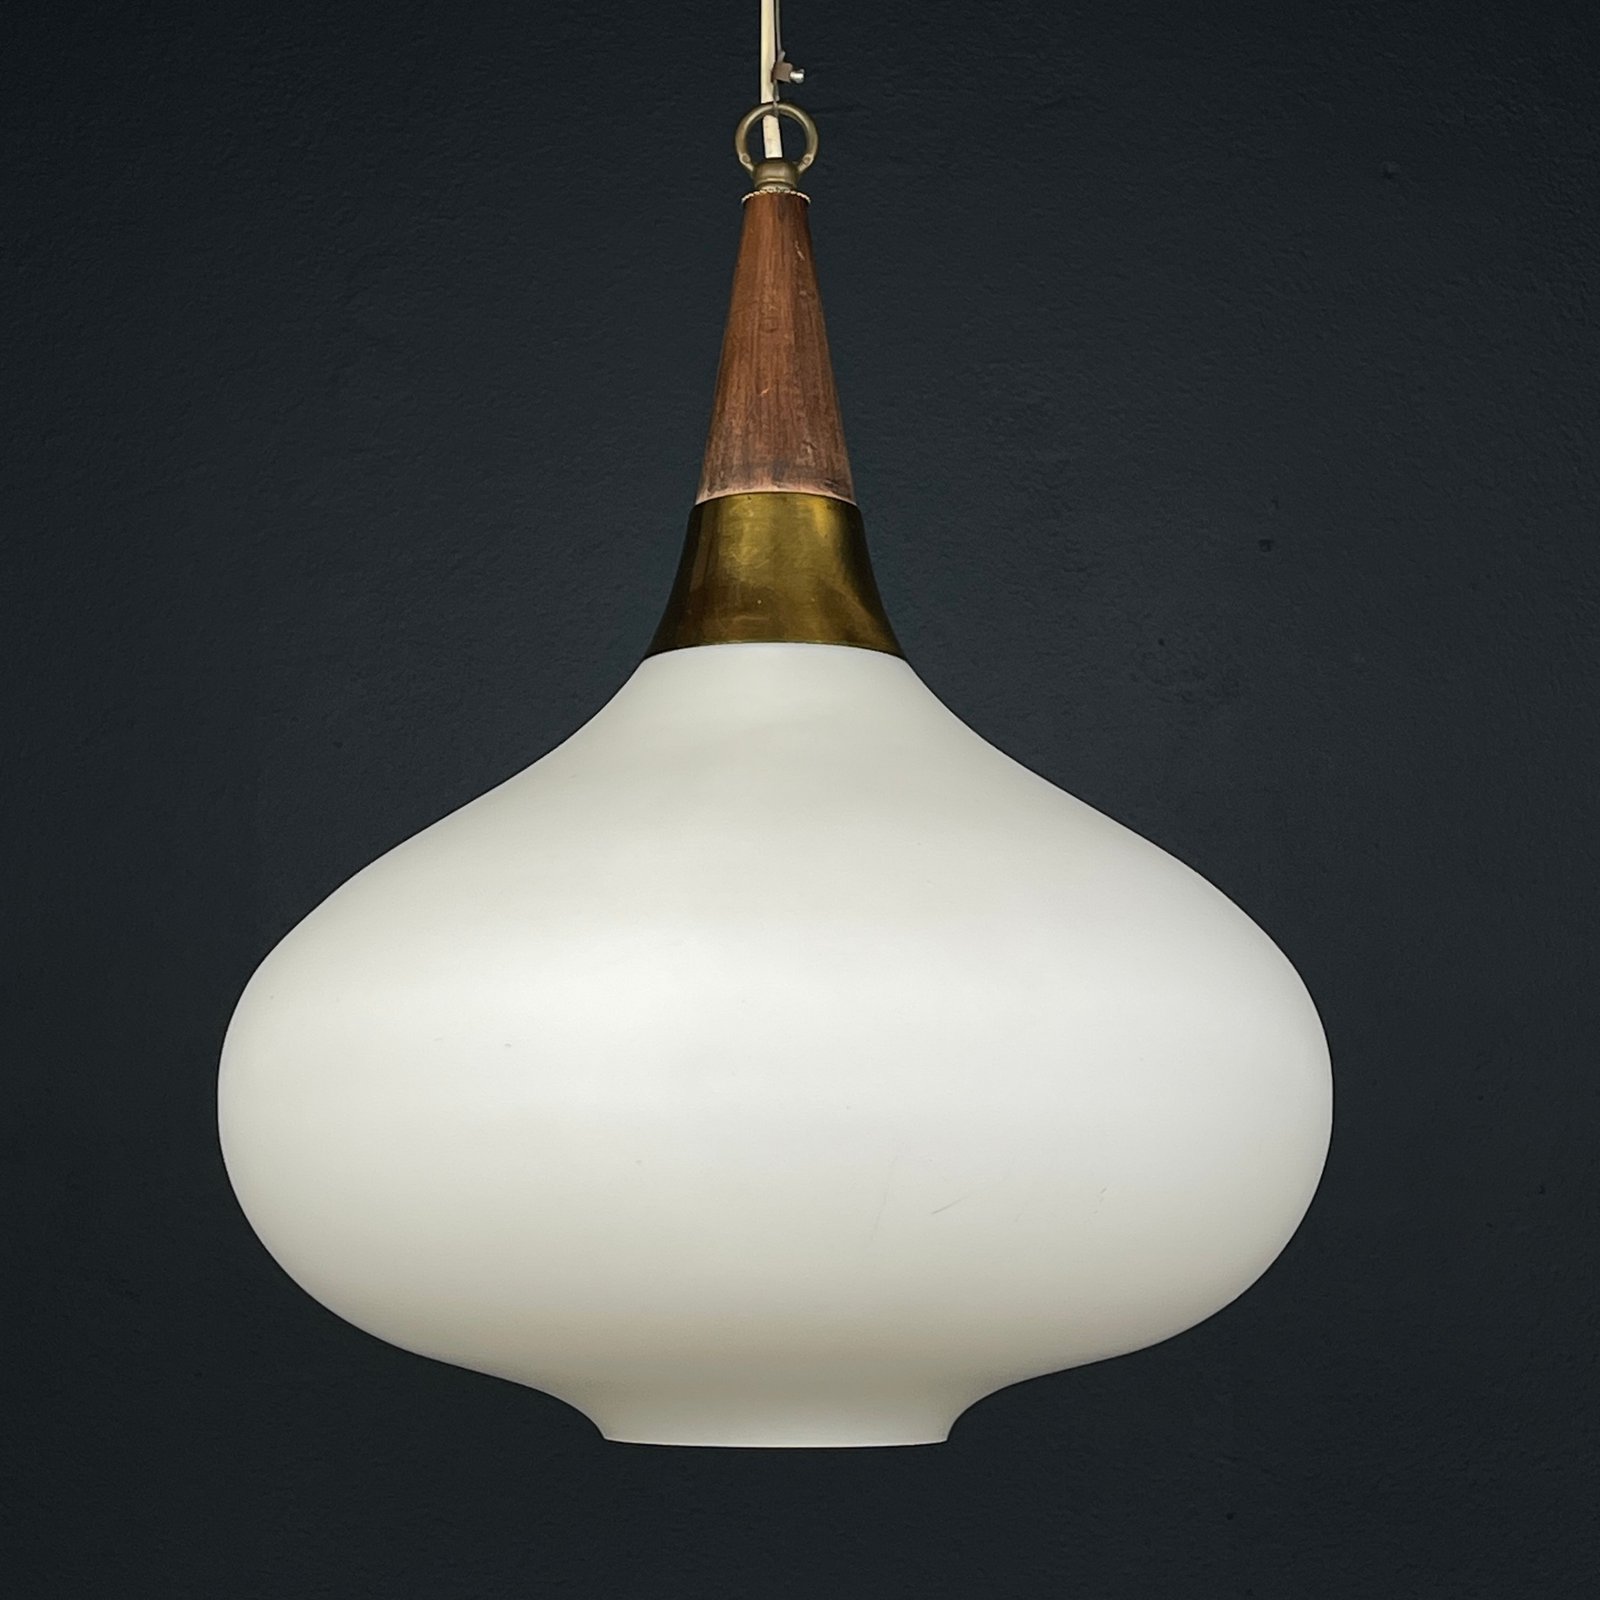 Mid-century Modern pendant lamp by Stilnovo, Italy 1950s